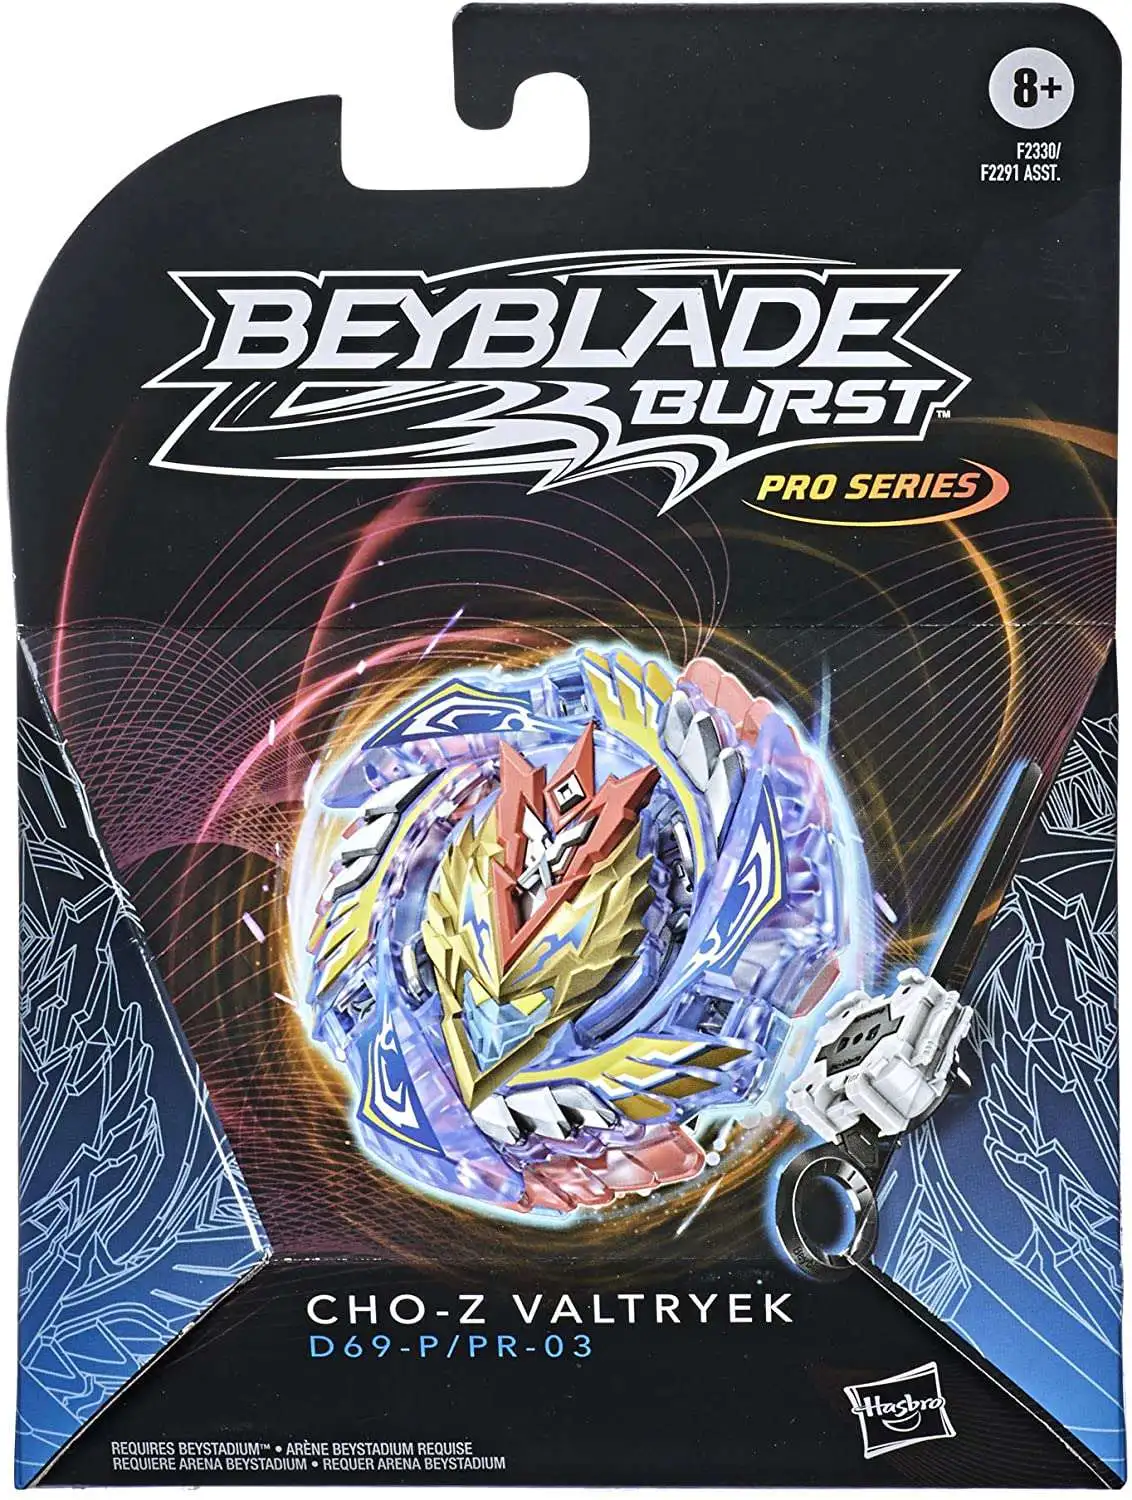 Beyblade Burst Pro Series CHO VALTRYEK Starter Pack Hasbro Toys - ToyWiz